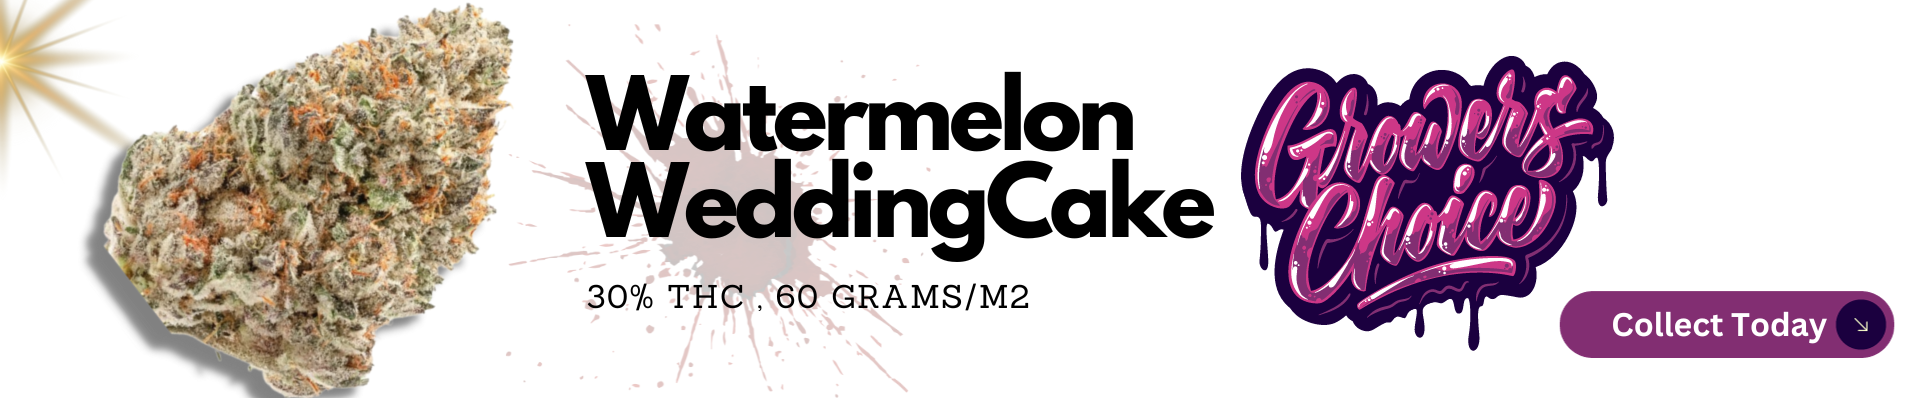 Watermelon Weddingcake
